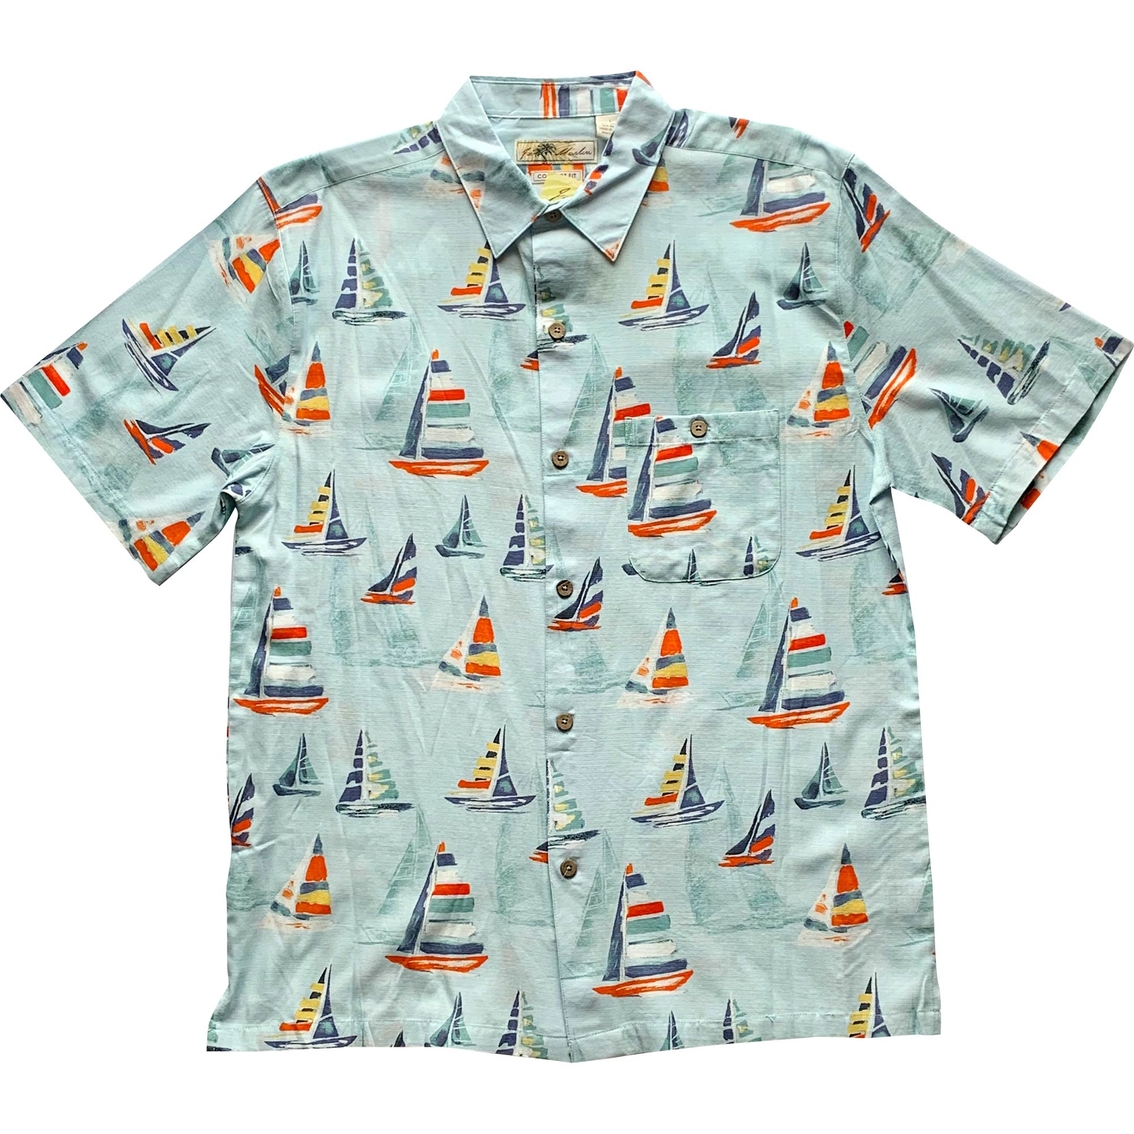 Joe Marlin Sea Shirt | Shirts | Clothing & Accessories | Shop The Exchange